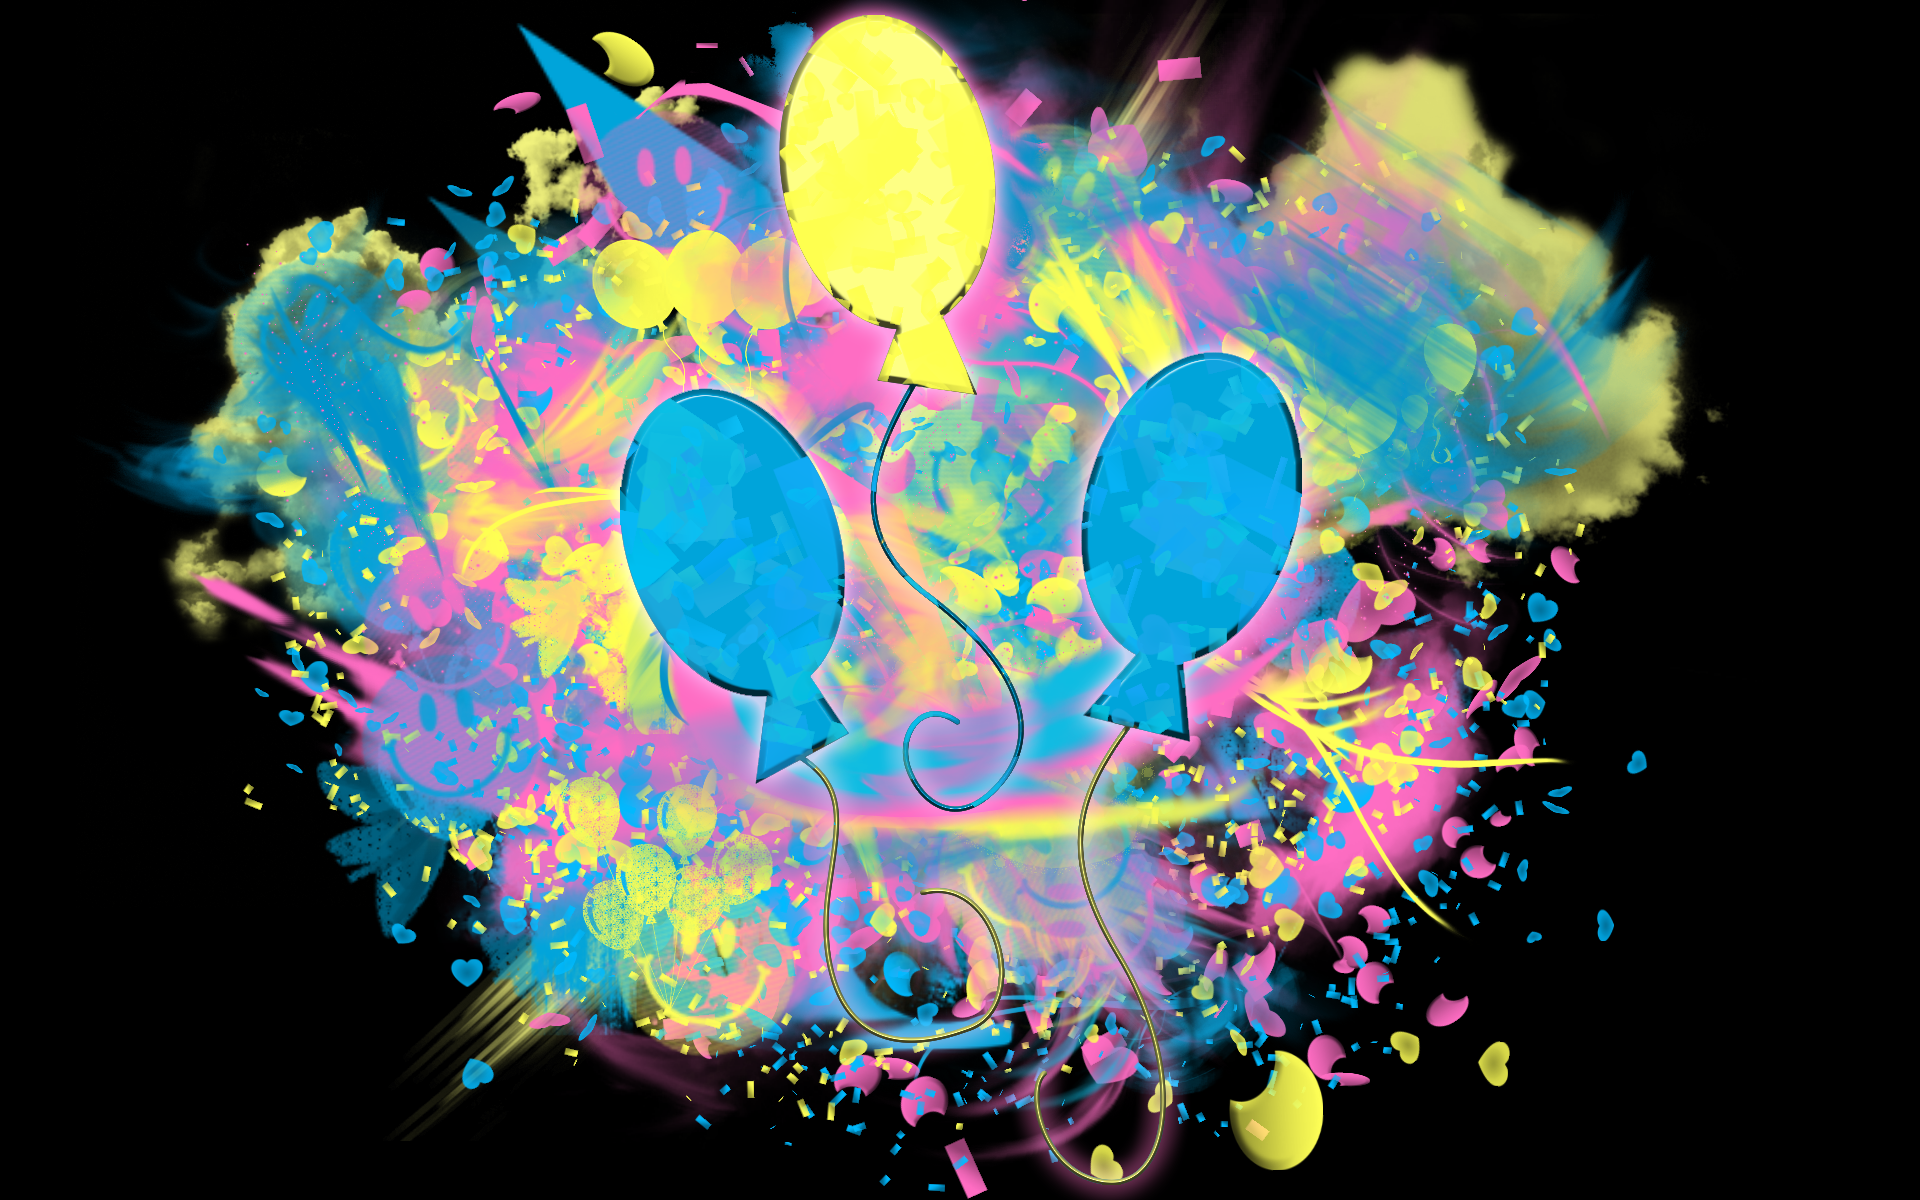 Pinkie Pie's Balloons by tvolcom322